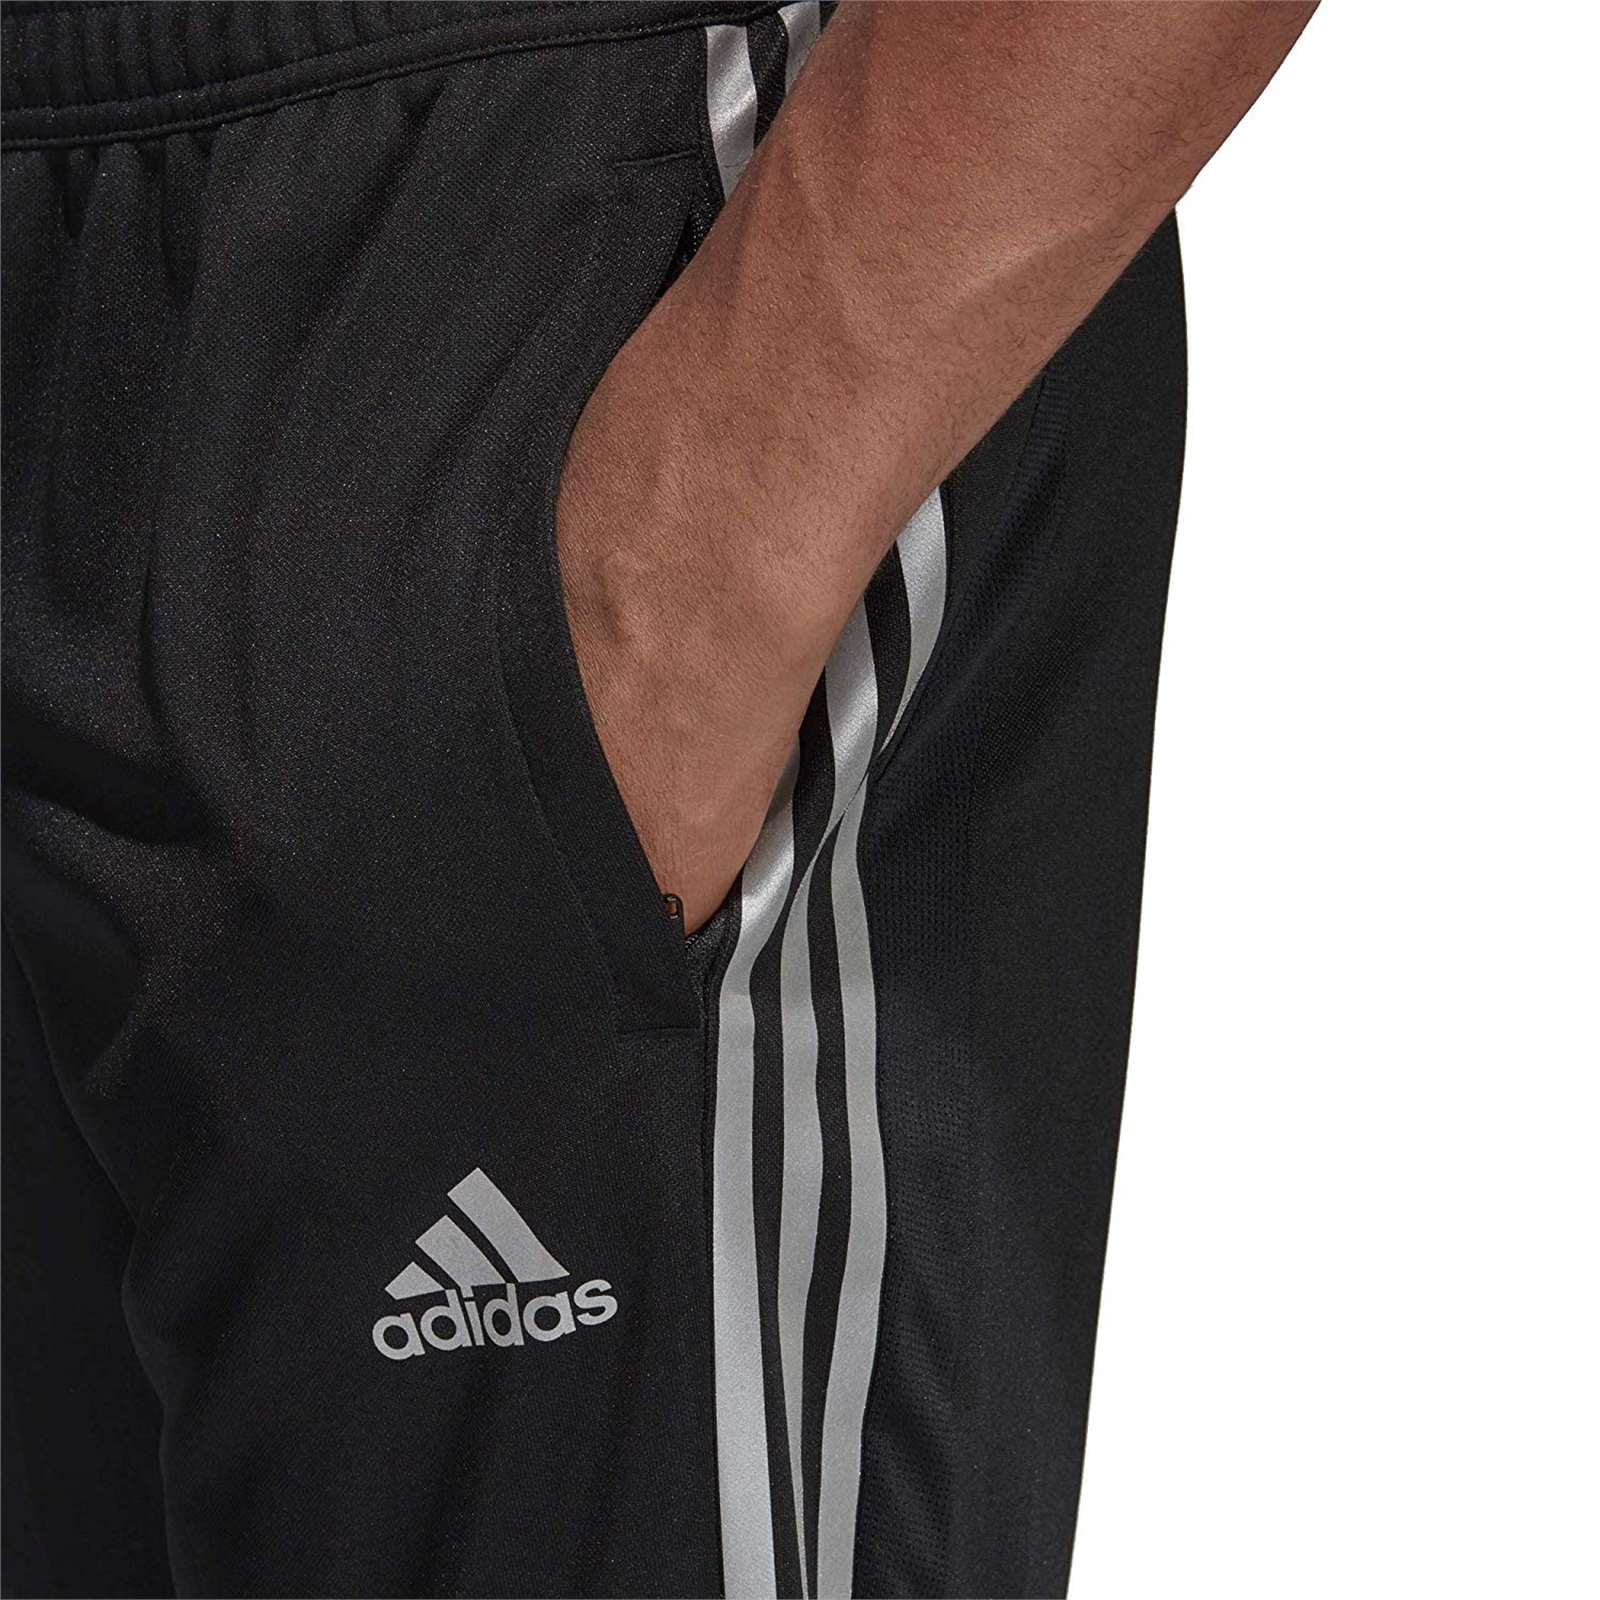 New Adidas 19 Climacool Men's Athletic Workout Training Pants Walmart.com